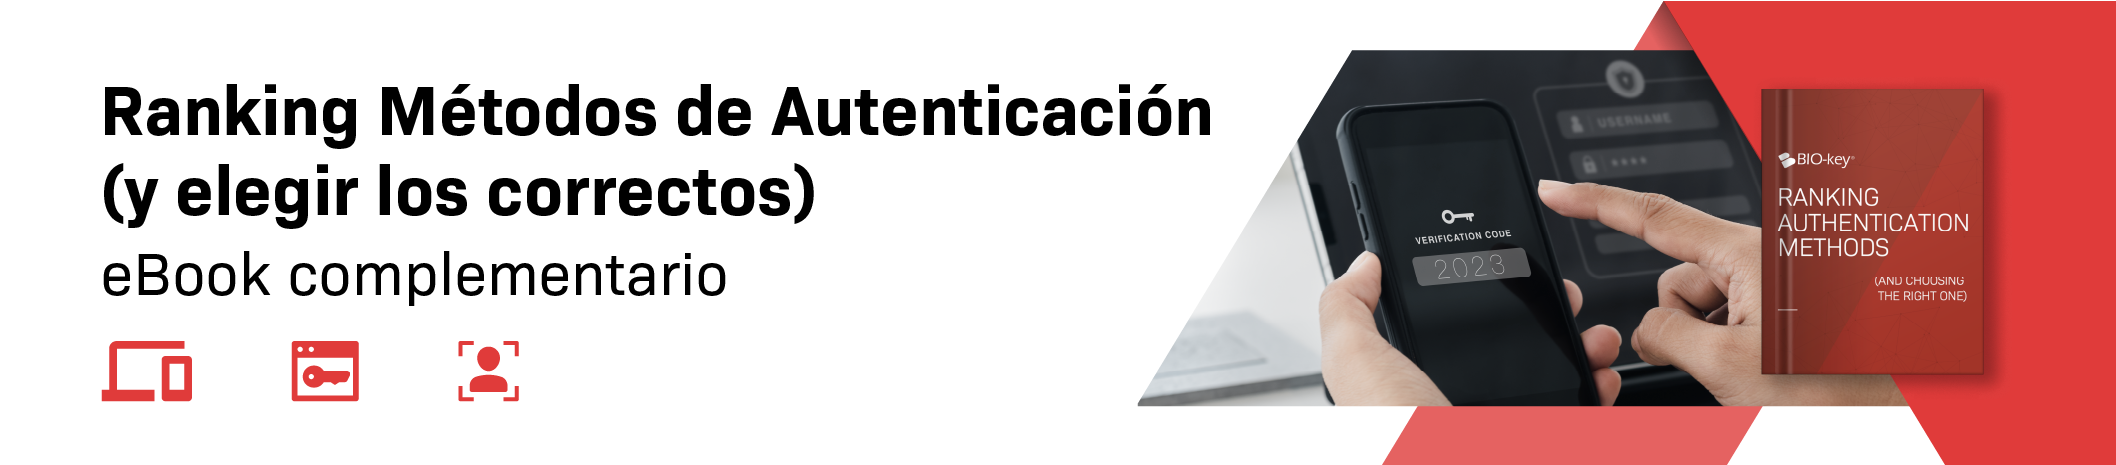 Ranking Authentication Methods (Spanish)